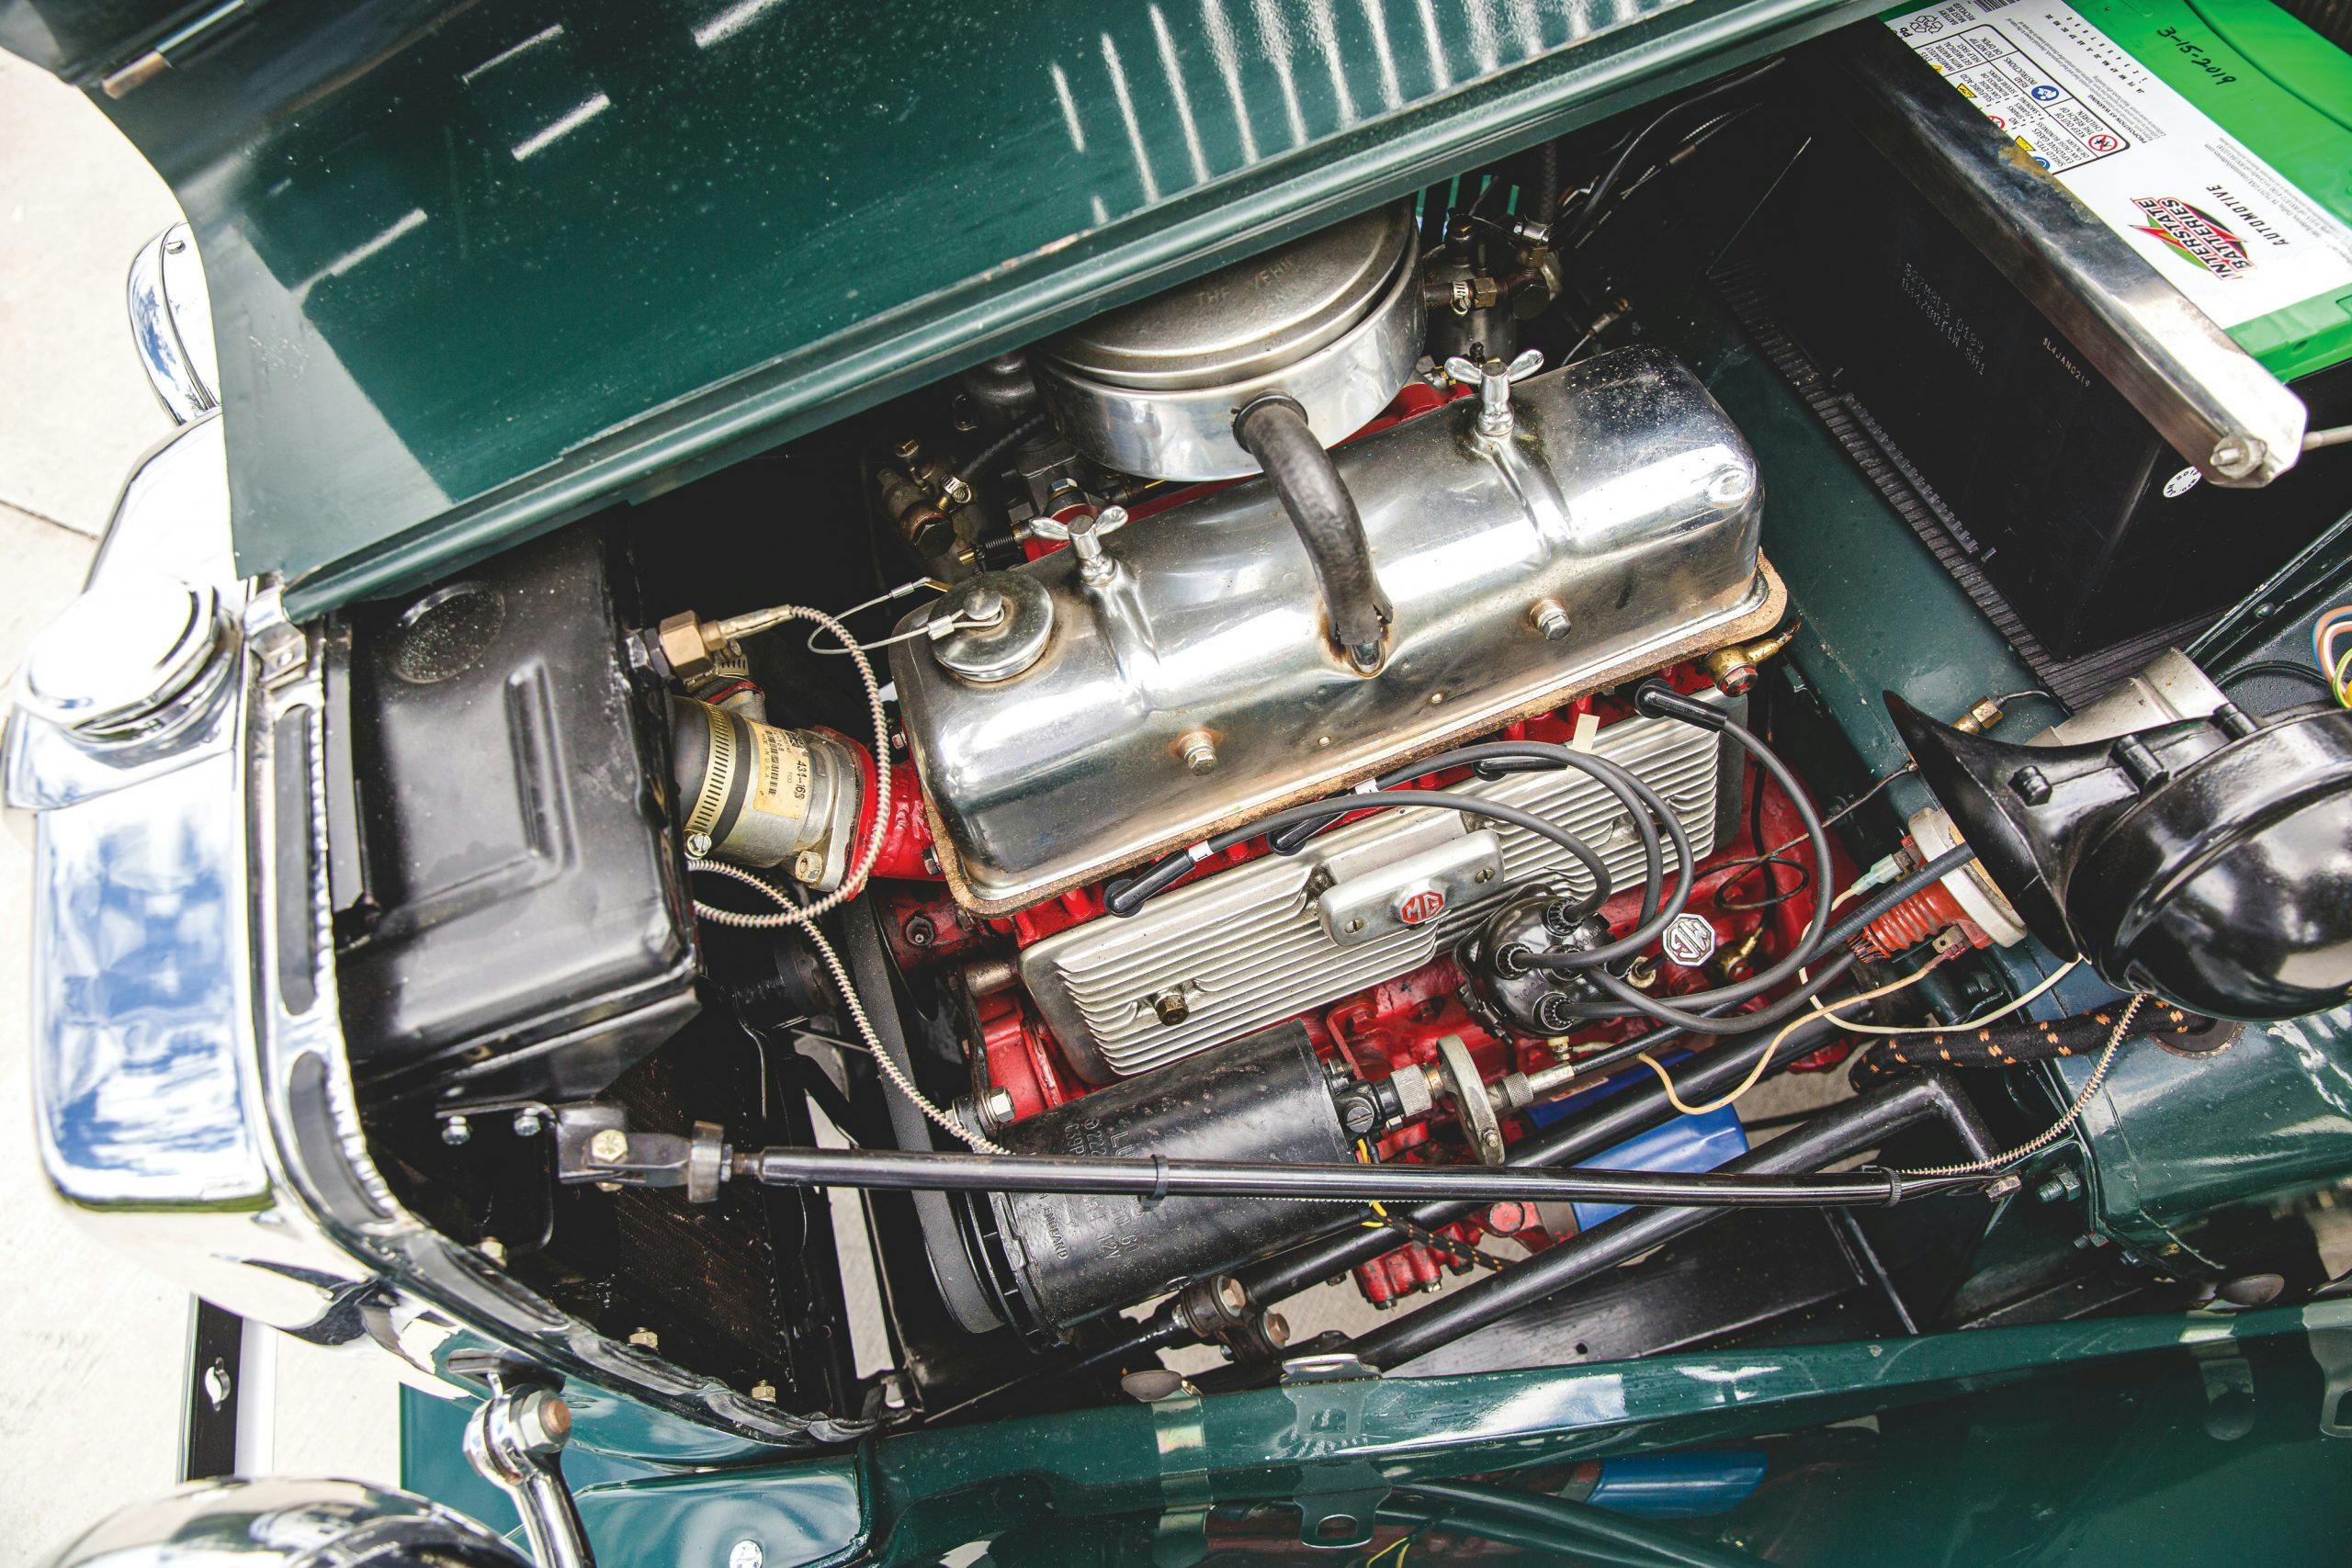 1952 MG TD engine